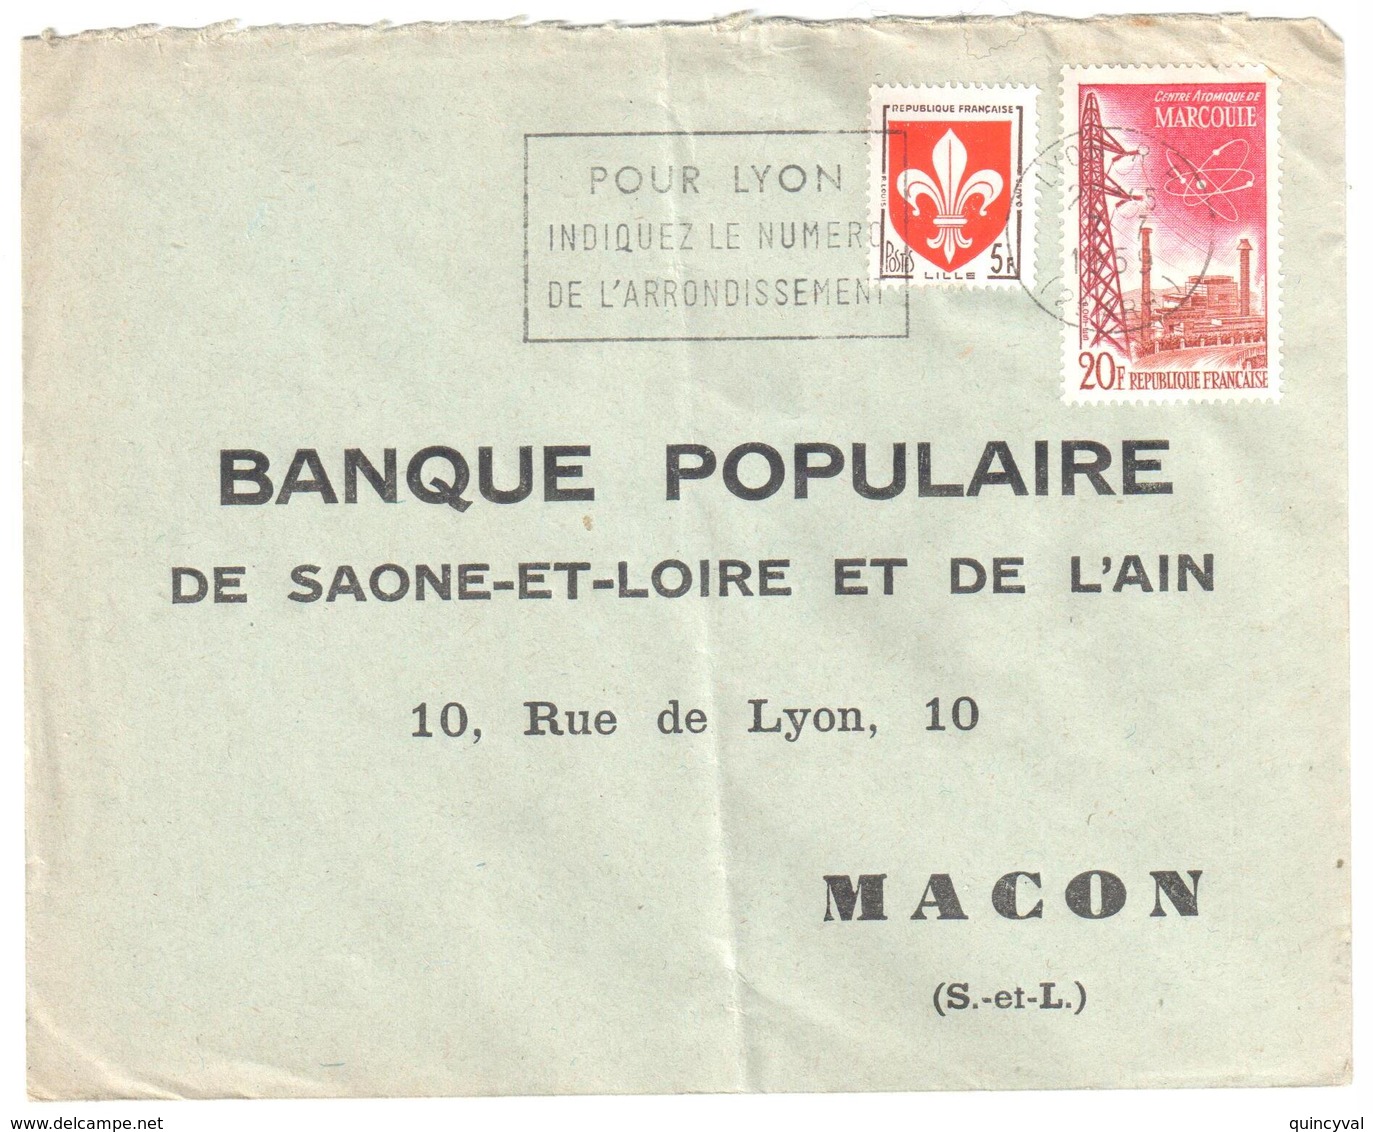 LYON Lettre 20 F MARCOULE Centre Atomique 5 F Blason Lille Yv 1204 1186 Ob 7 7 1959 - Covers & Documents